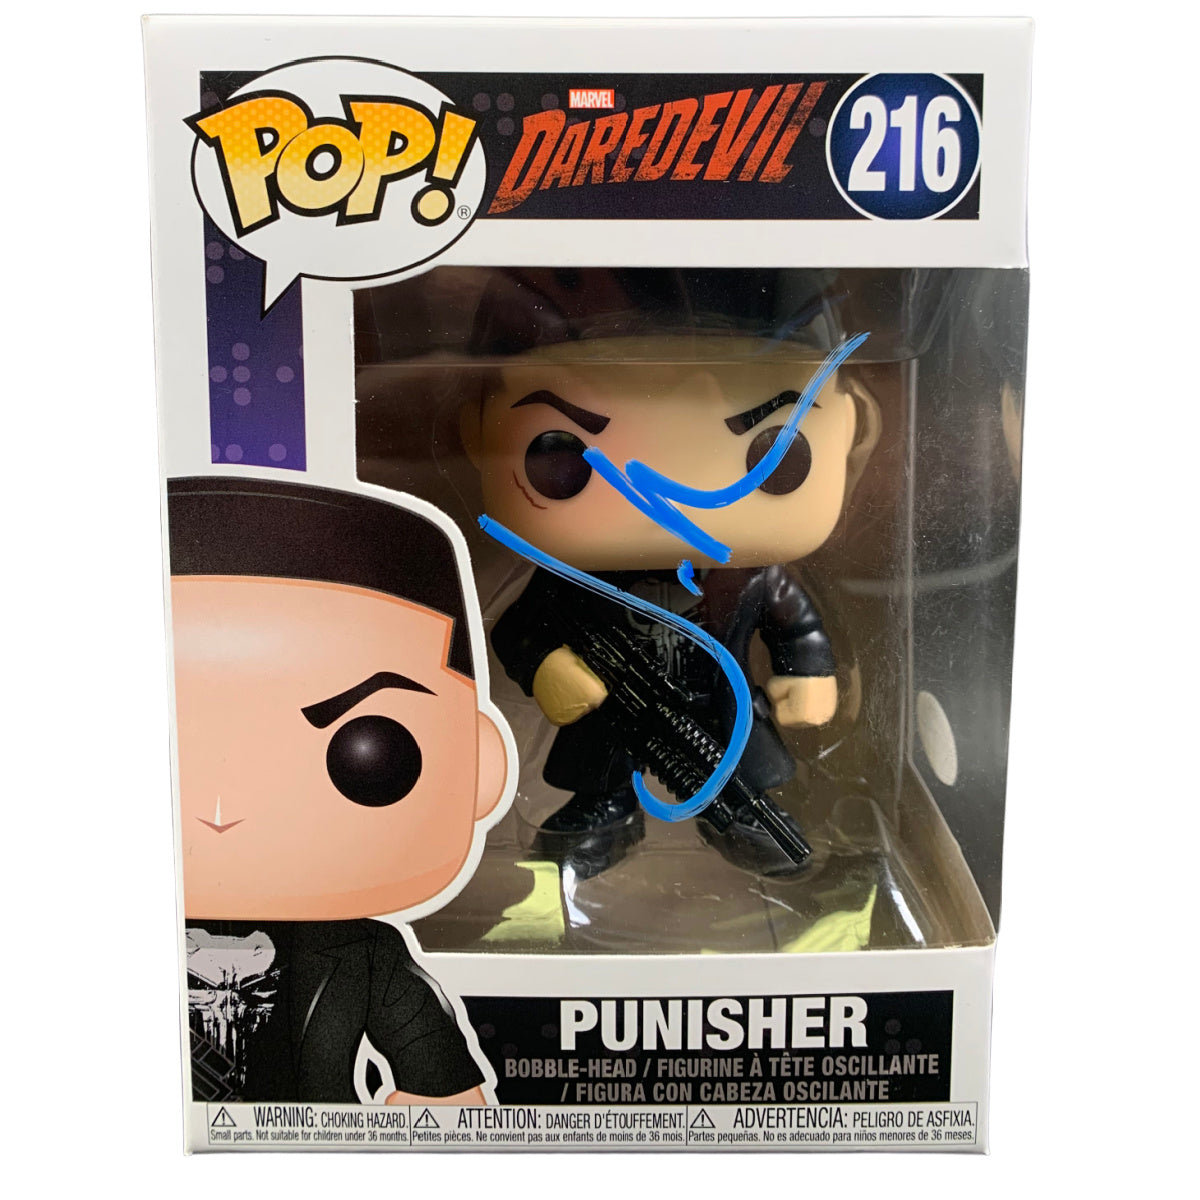 Jon Bernthal Signed Funko POP The Punisher #216 Autographed ACOA